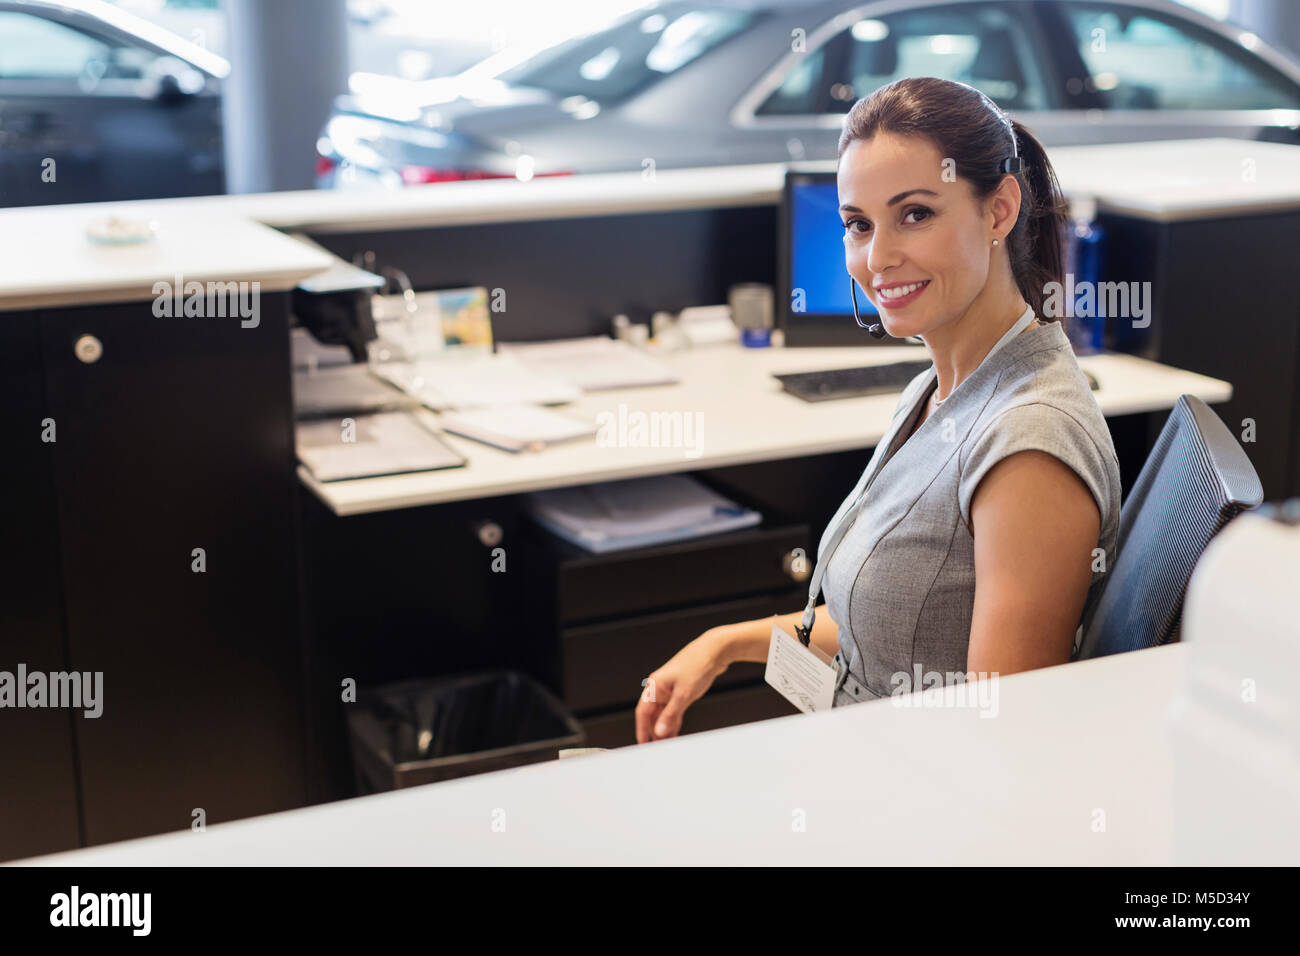 Portrait souriant, confiant réceptionniste femme working at desk in car dealership showroom Banque D'Images